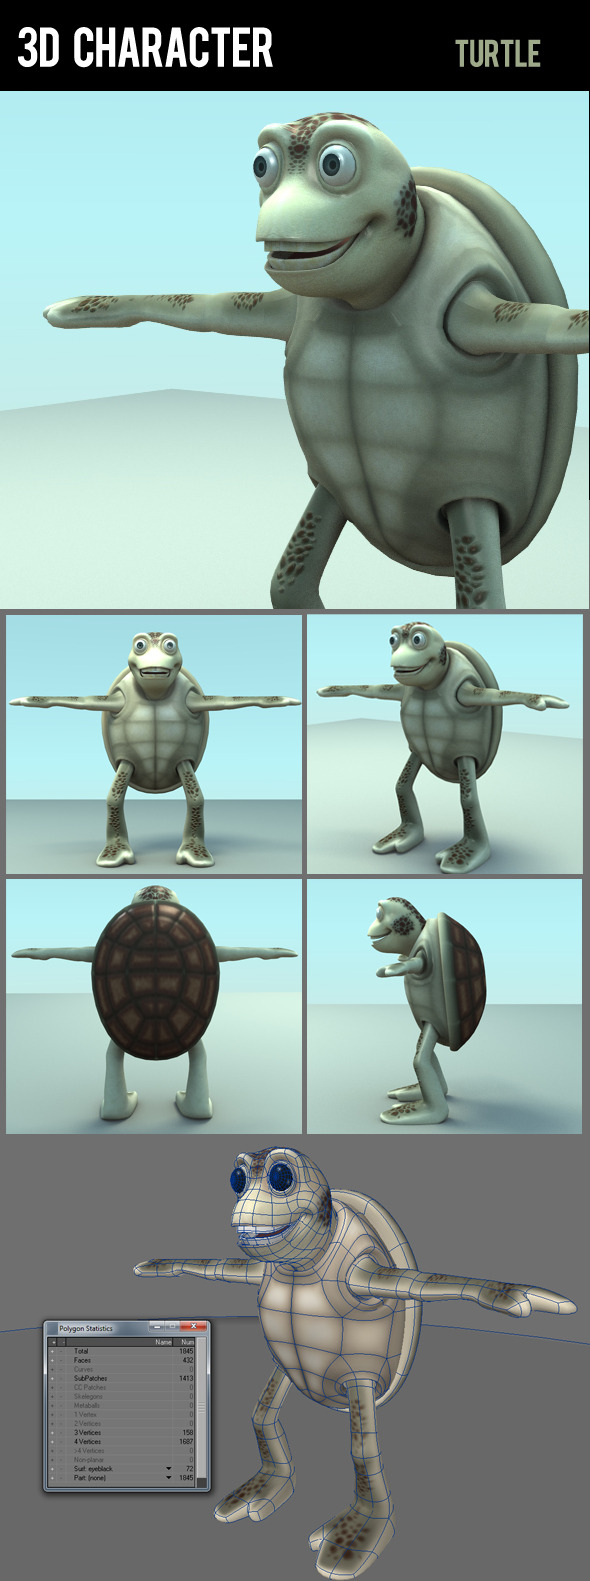 3d character turtle - 3Docean 281406